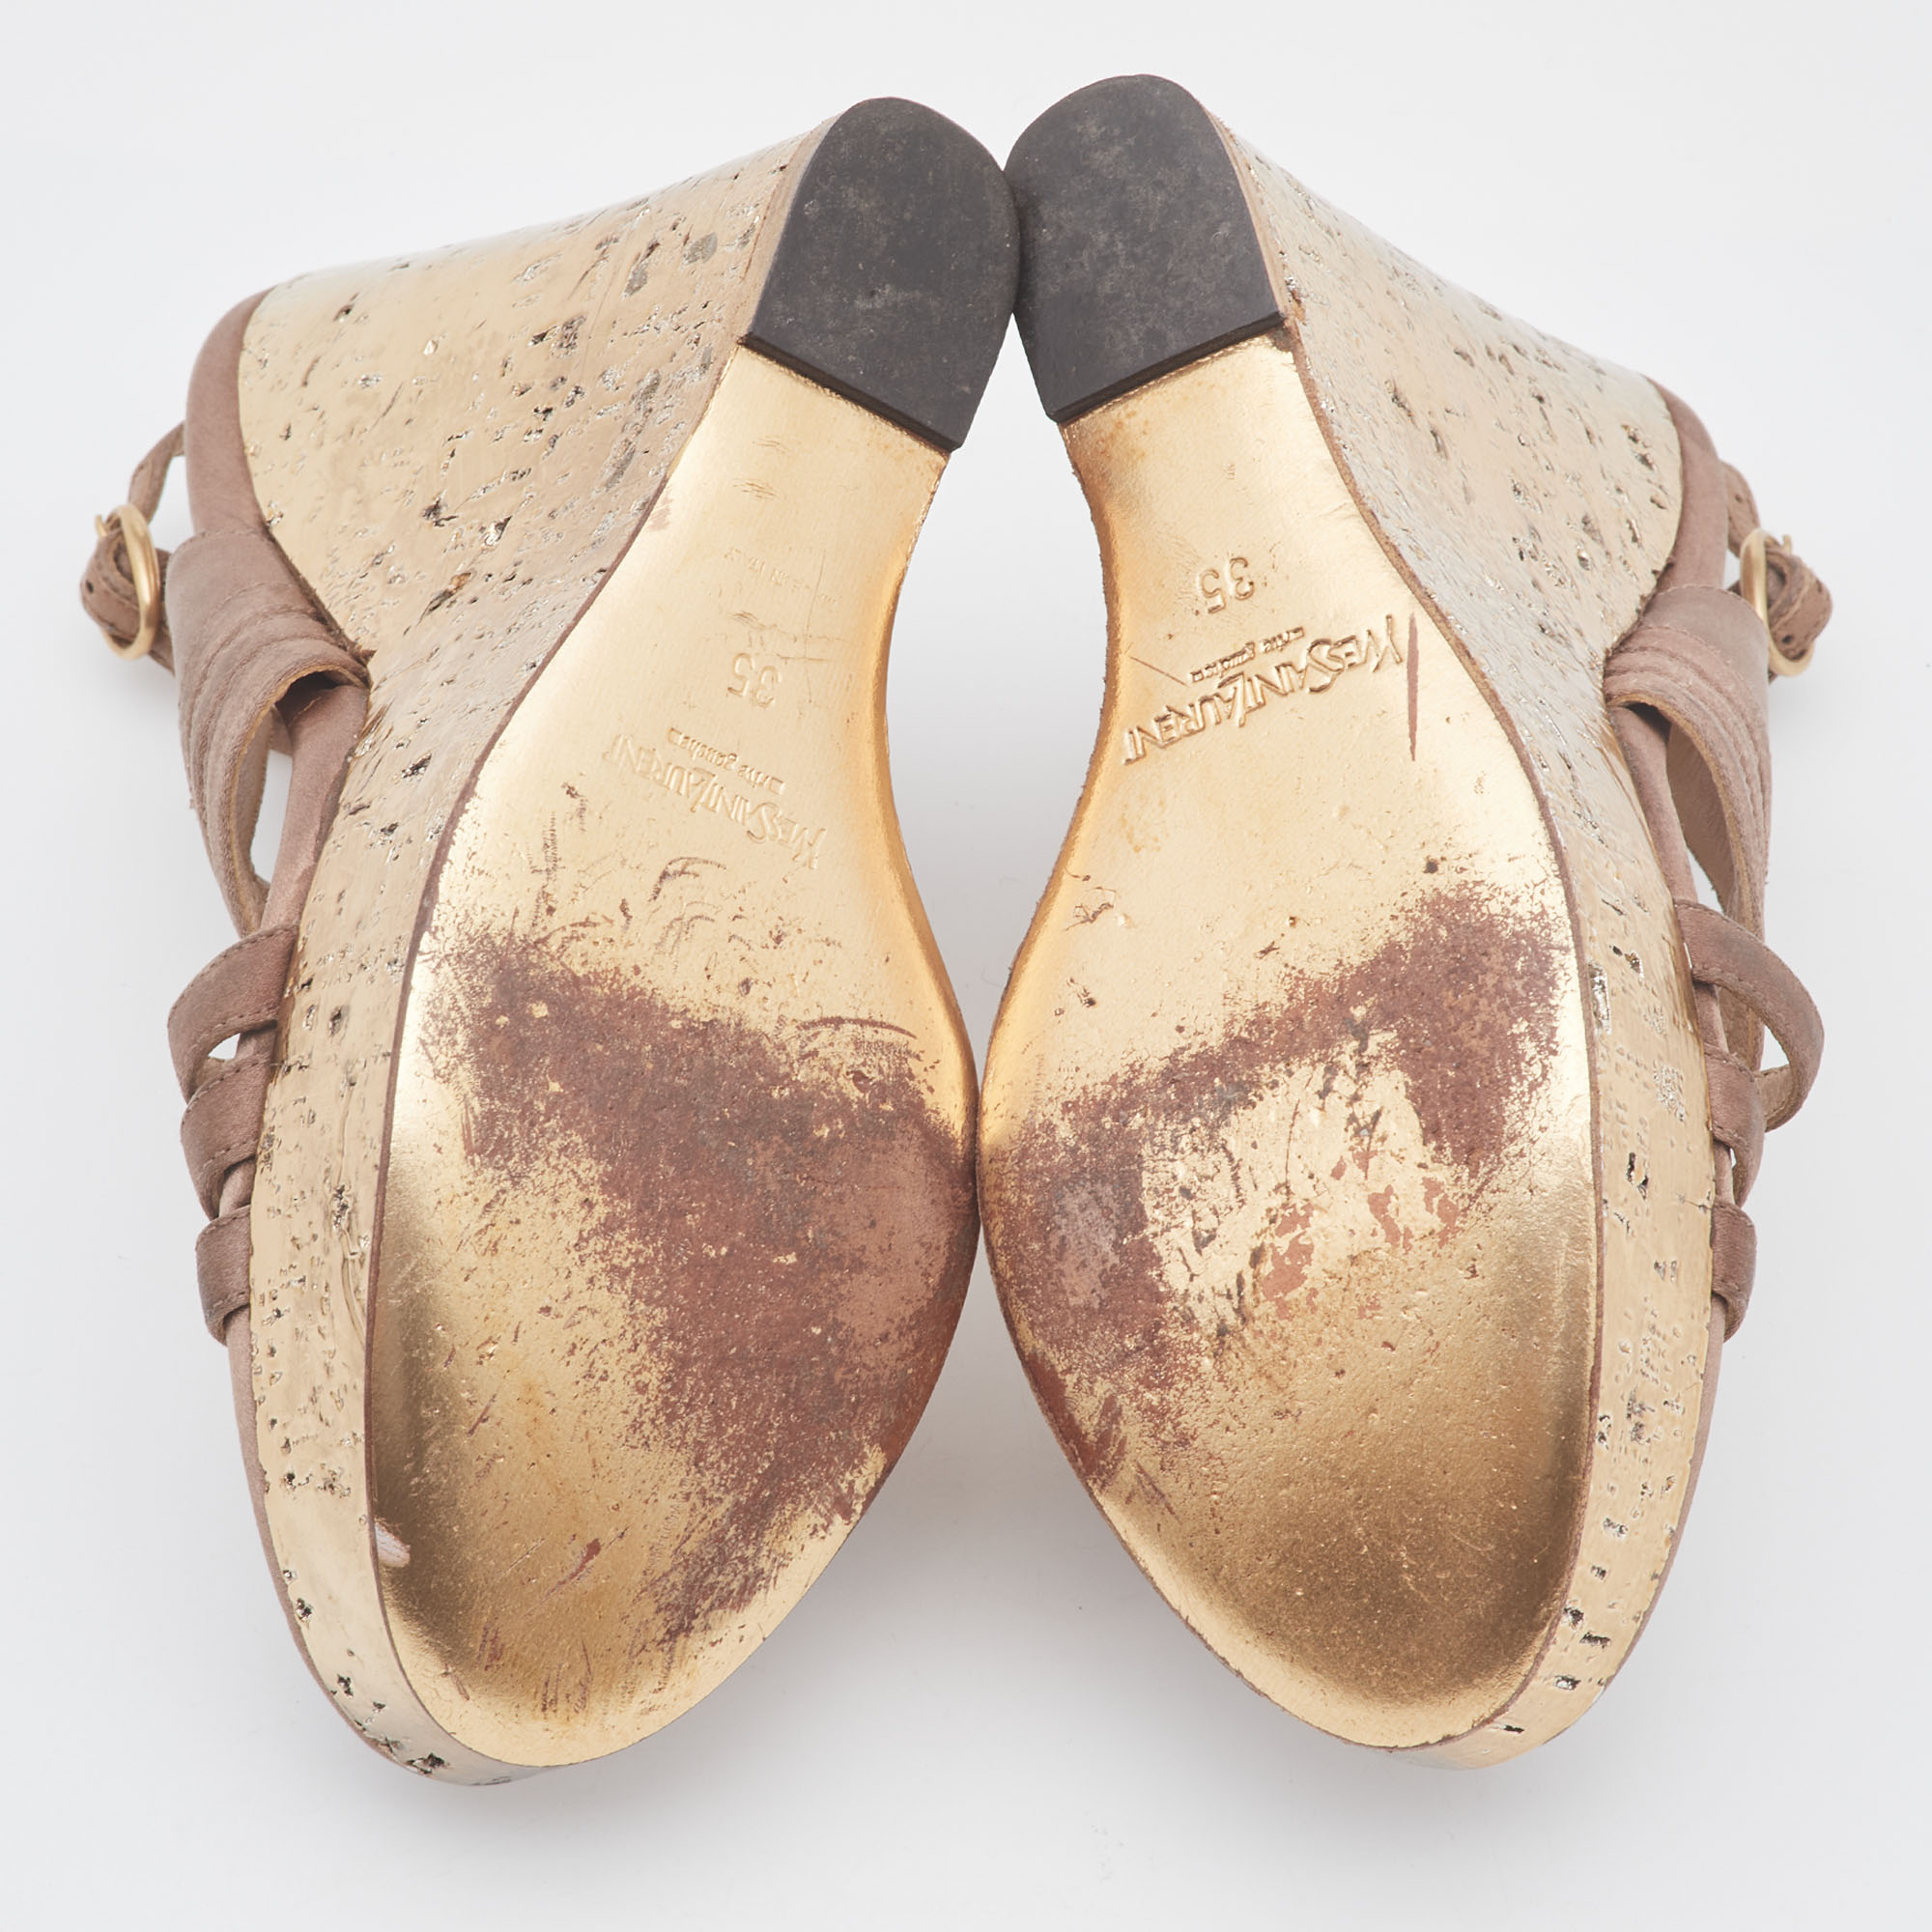 Yves Saint Laurent Brown Satin Wedge Sandals Size 35